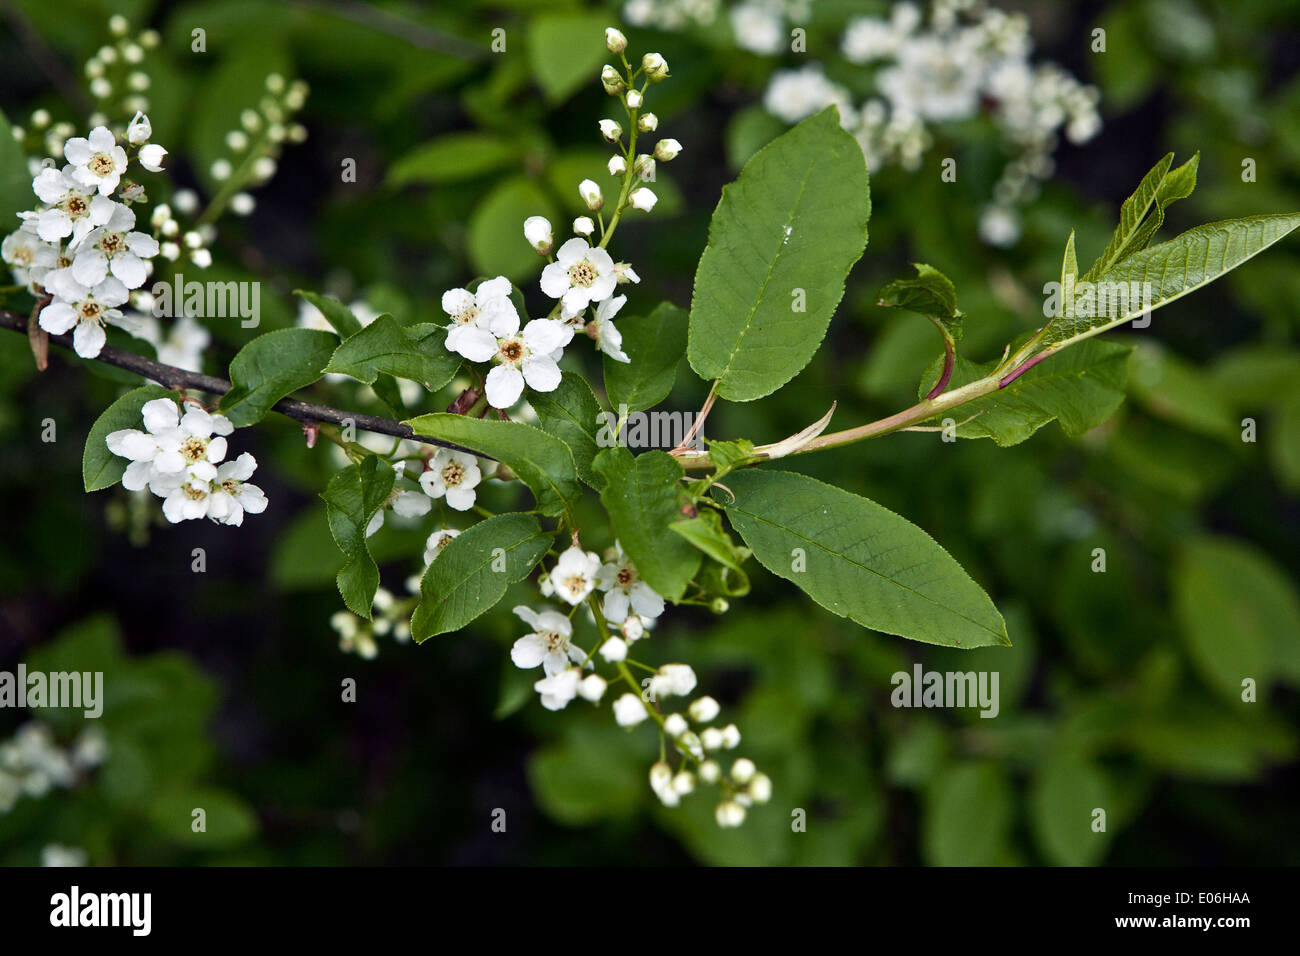 The Flowers of Padus avium or Prunus padus blooming shrub Stock Photo